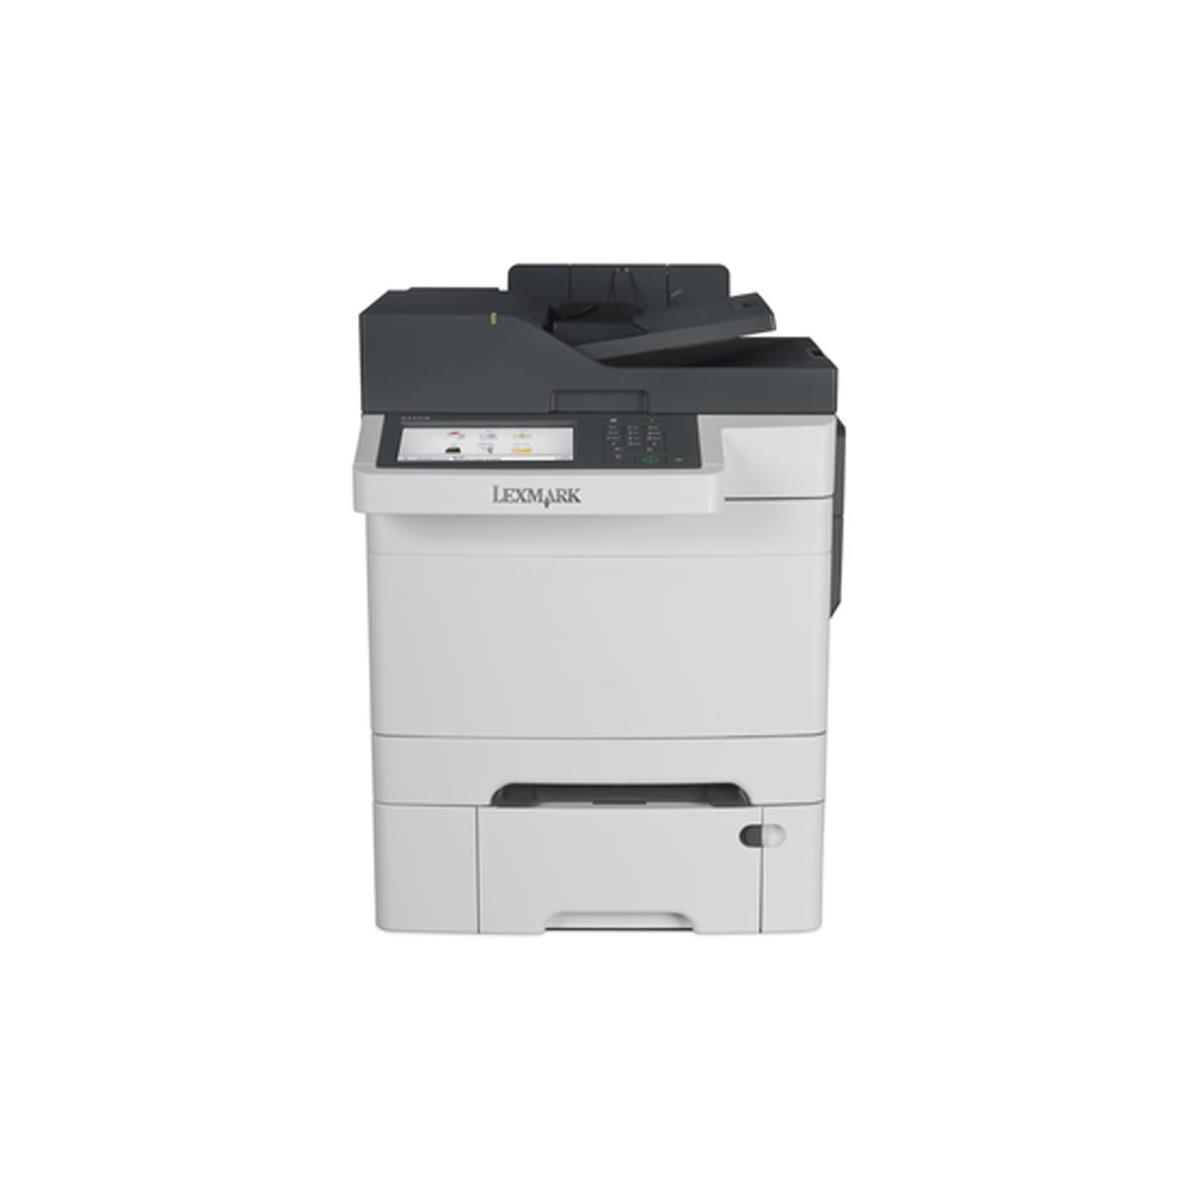 

Lexmark CX510dthe Multifunction Color Laser Printer - Print, Scan, Fax, Copy